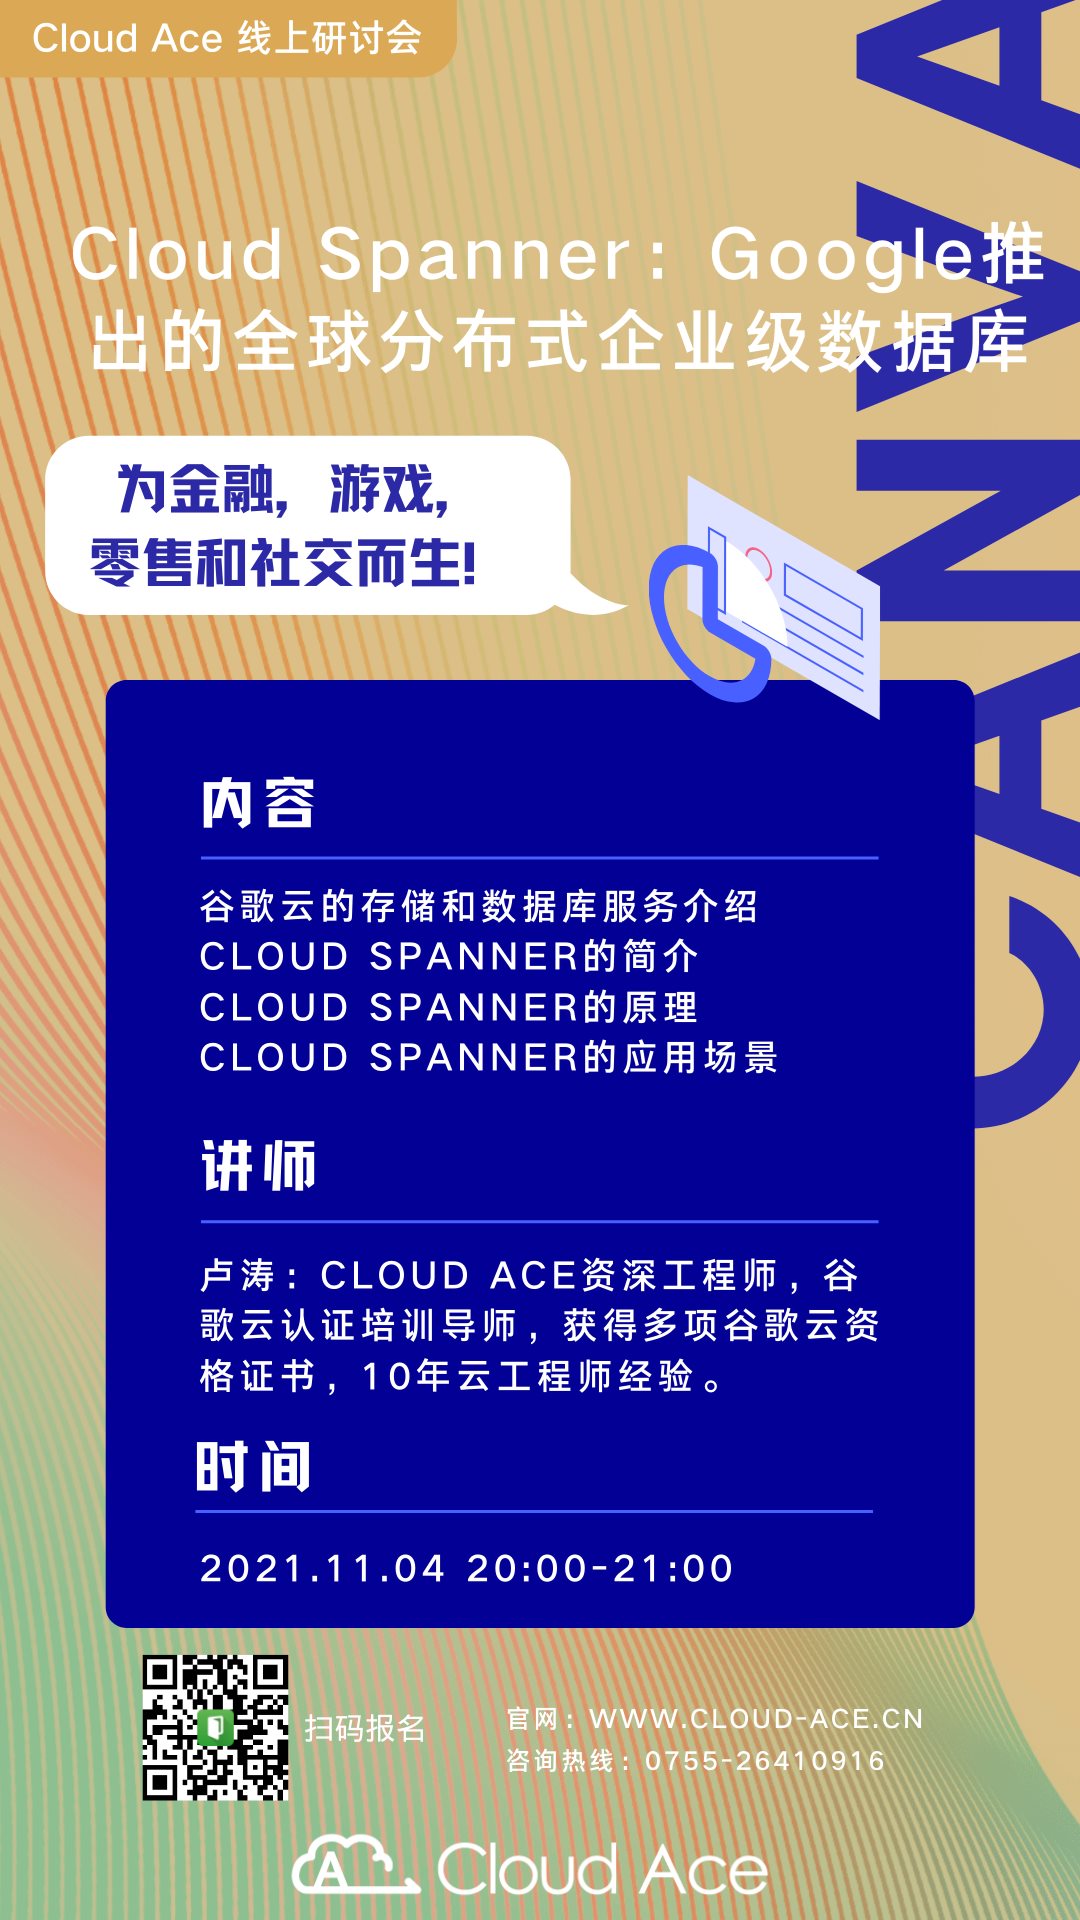 cloud spanner webinar poster (1).png